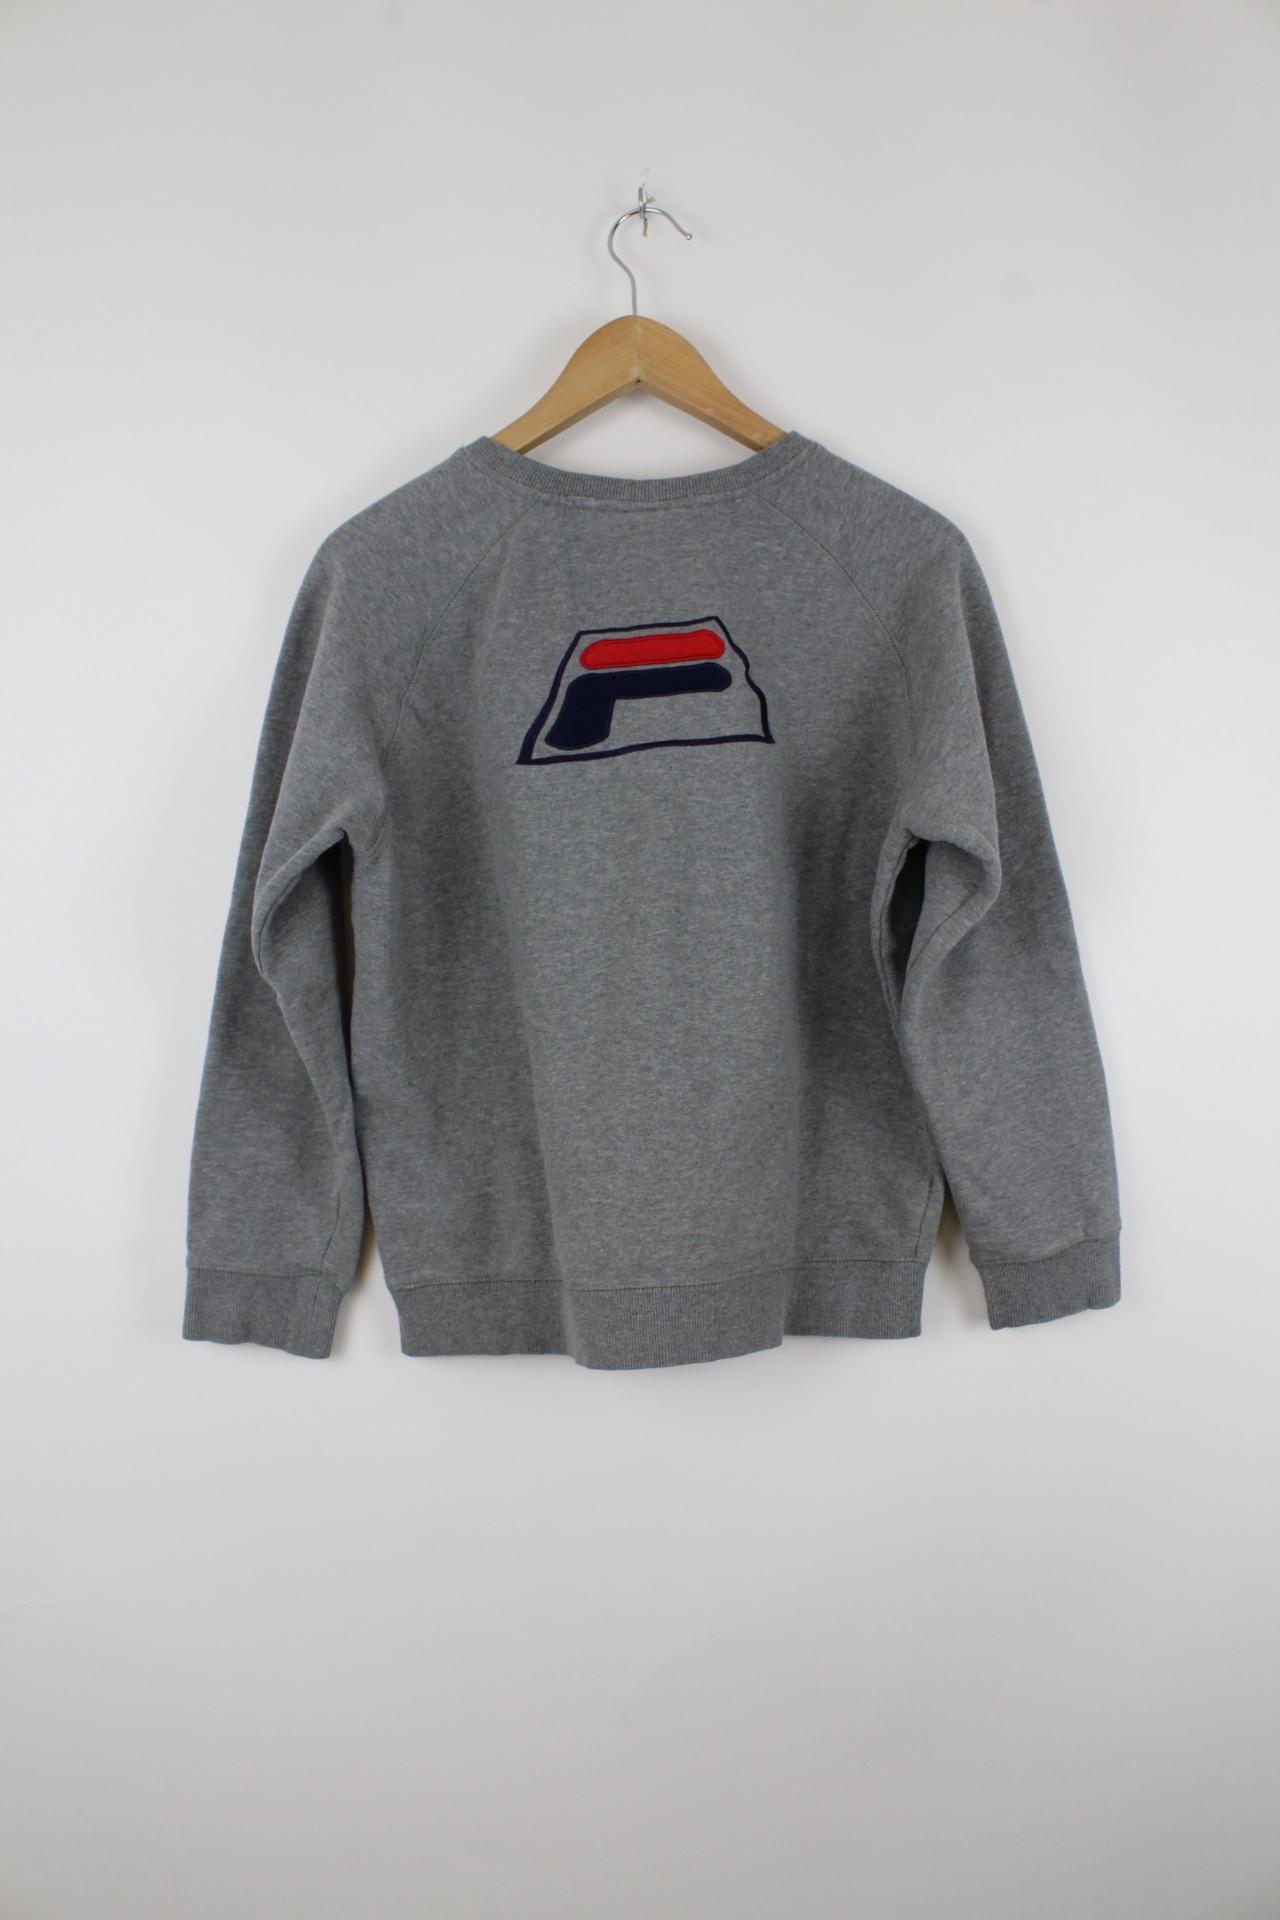 Vintage Fila Sweater Grau - S